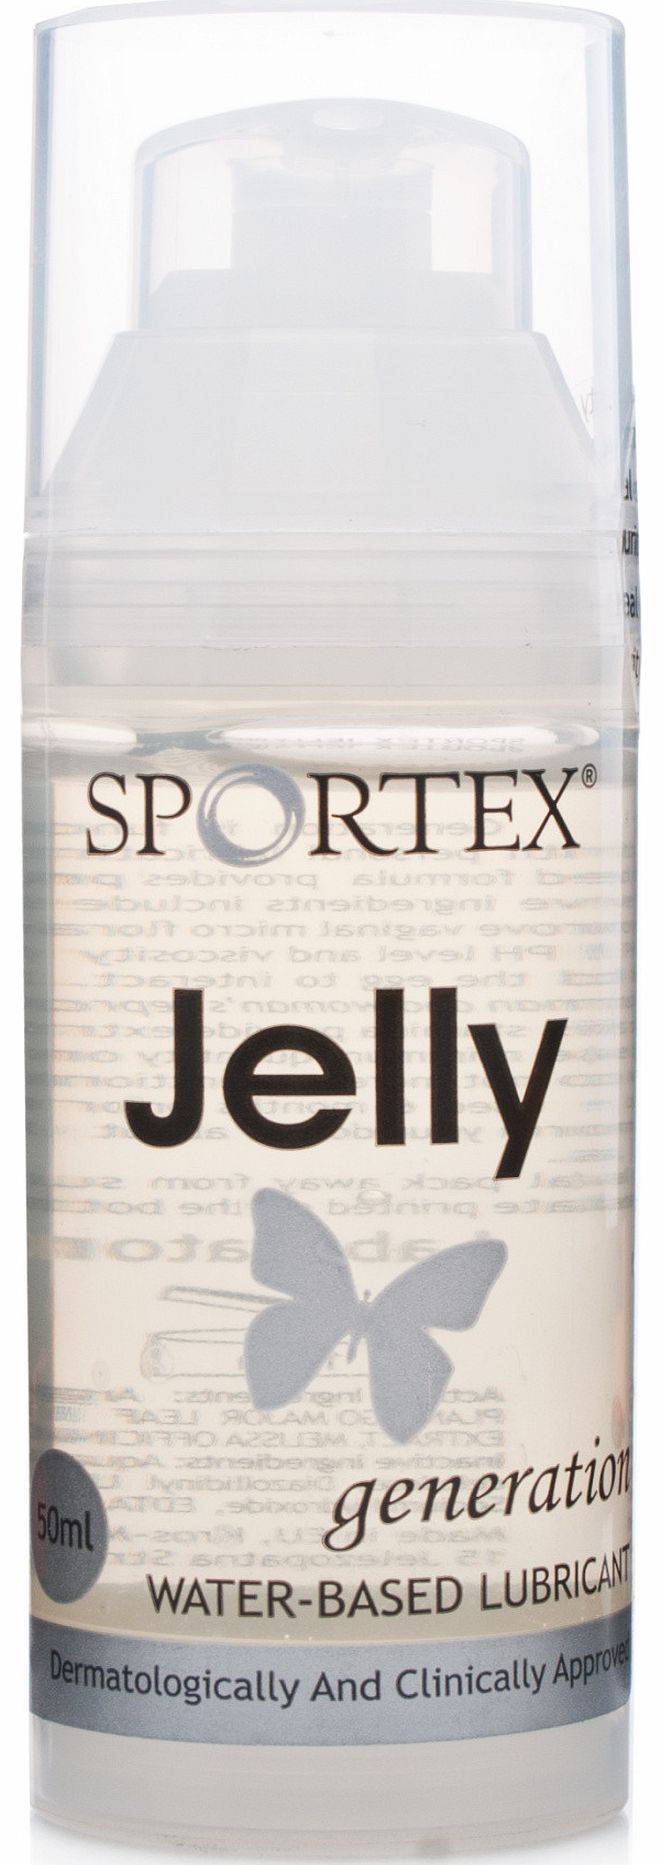 Sportex Jelly Generation Time 50ml Pump